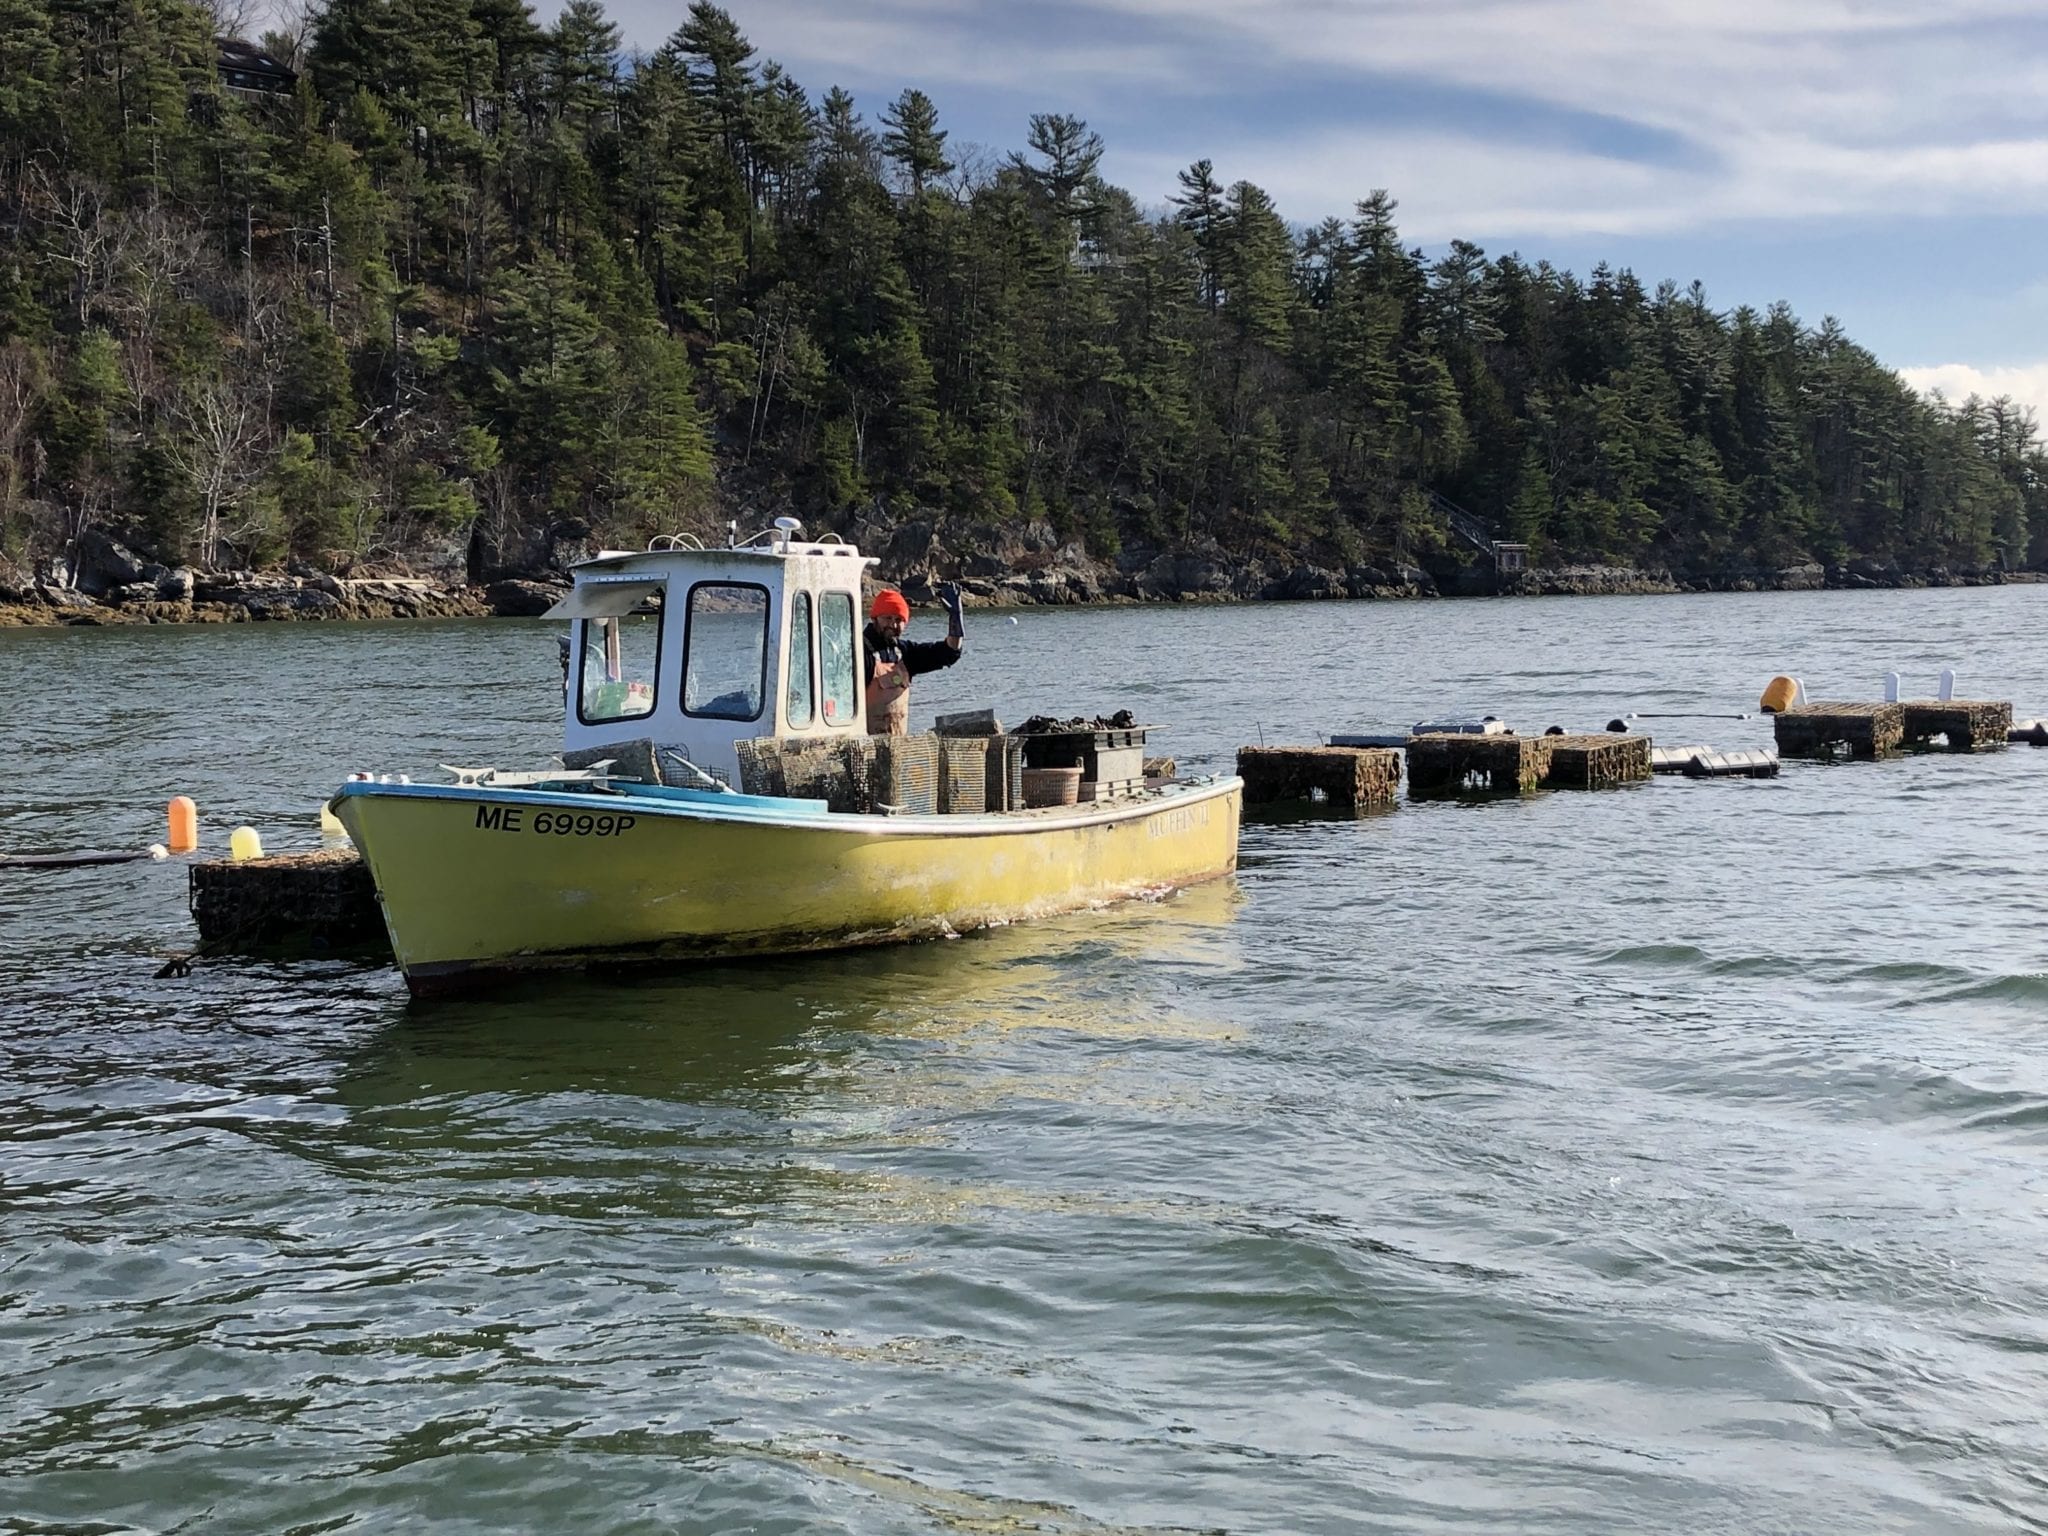 Winnegance boat on New Meadows River in Maine